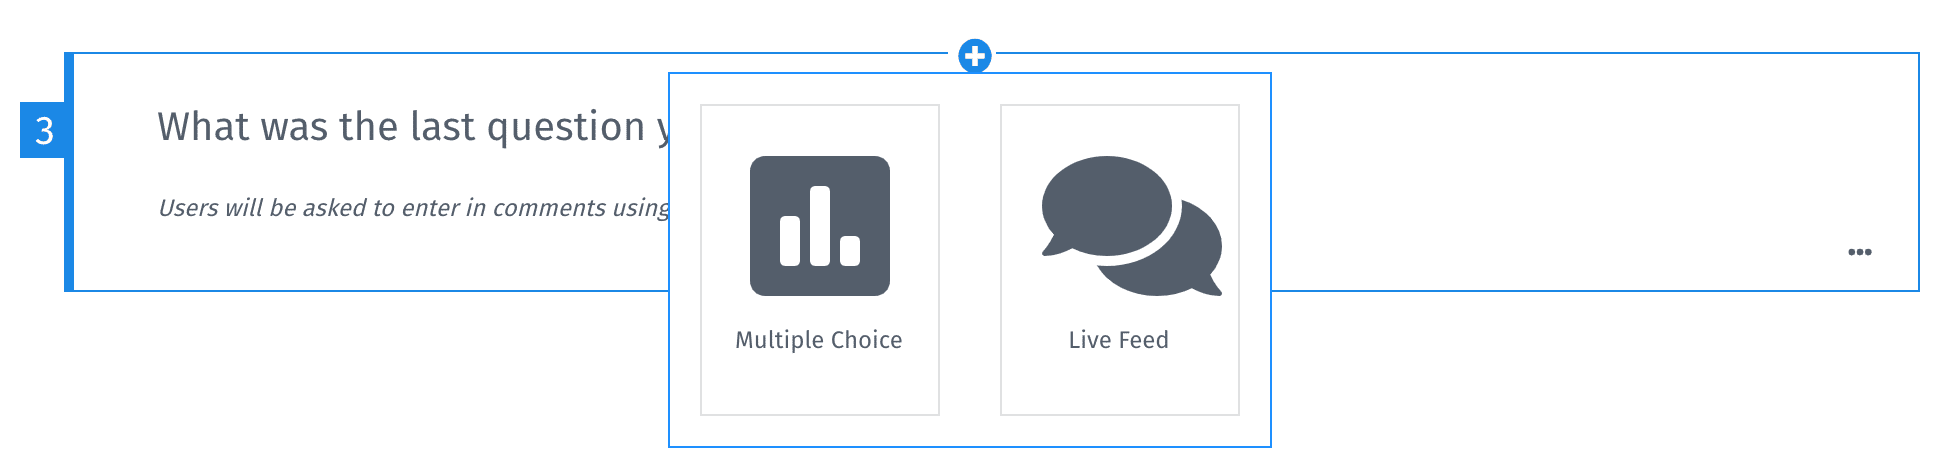 LivePolls إضافة سؤال إما الاختيار من متعدد أو البث المباشر